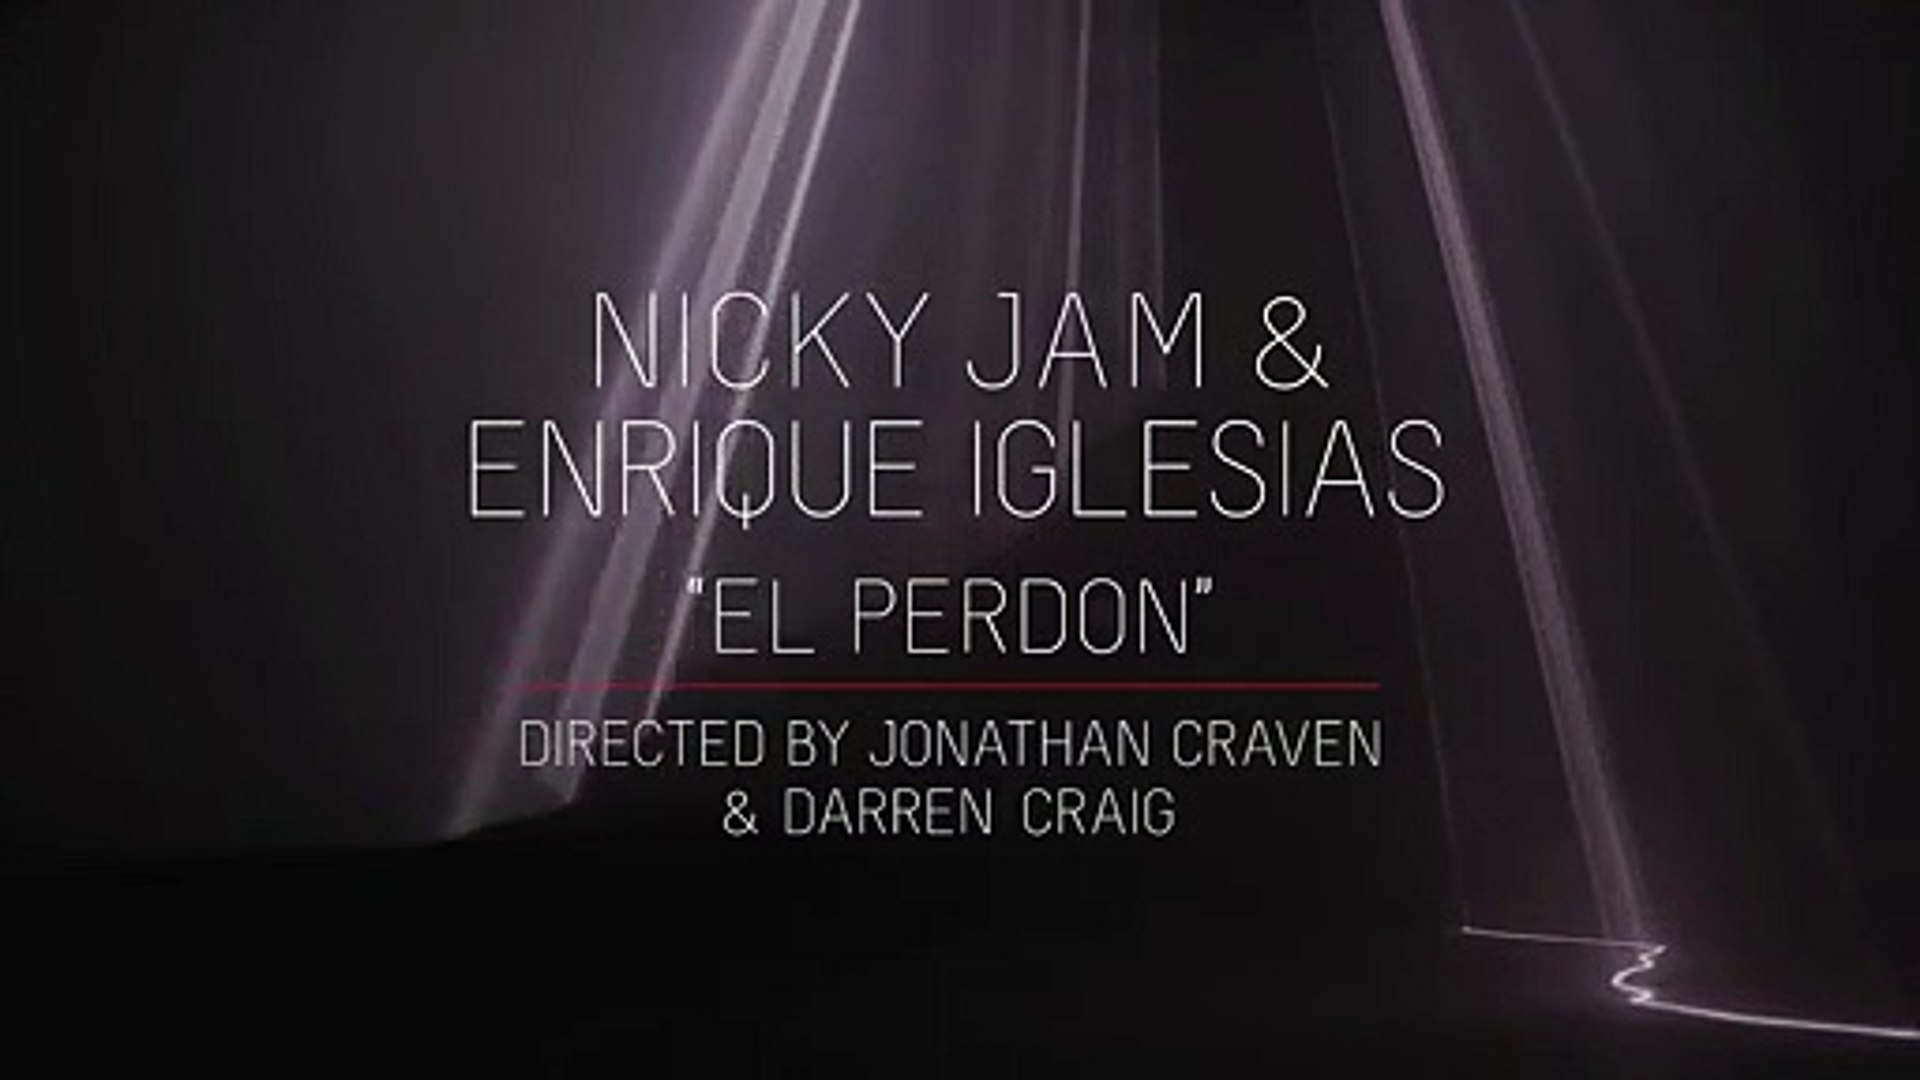 El Perdón Nicky Jam y Enrique Iglesias Official Music Video HD Vìdeo Enrique Latest videos new Video